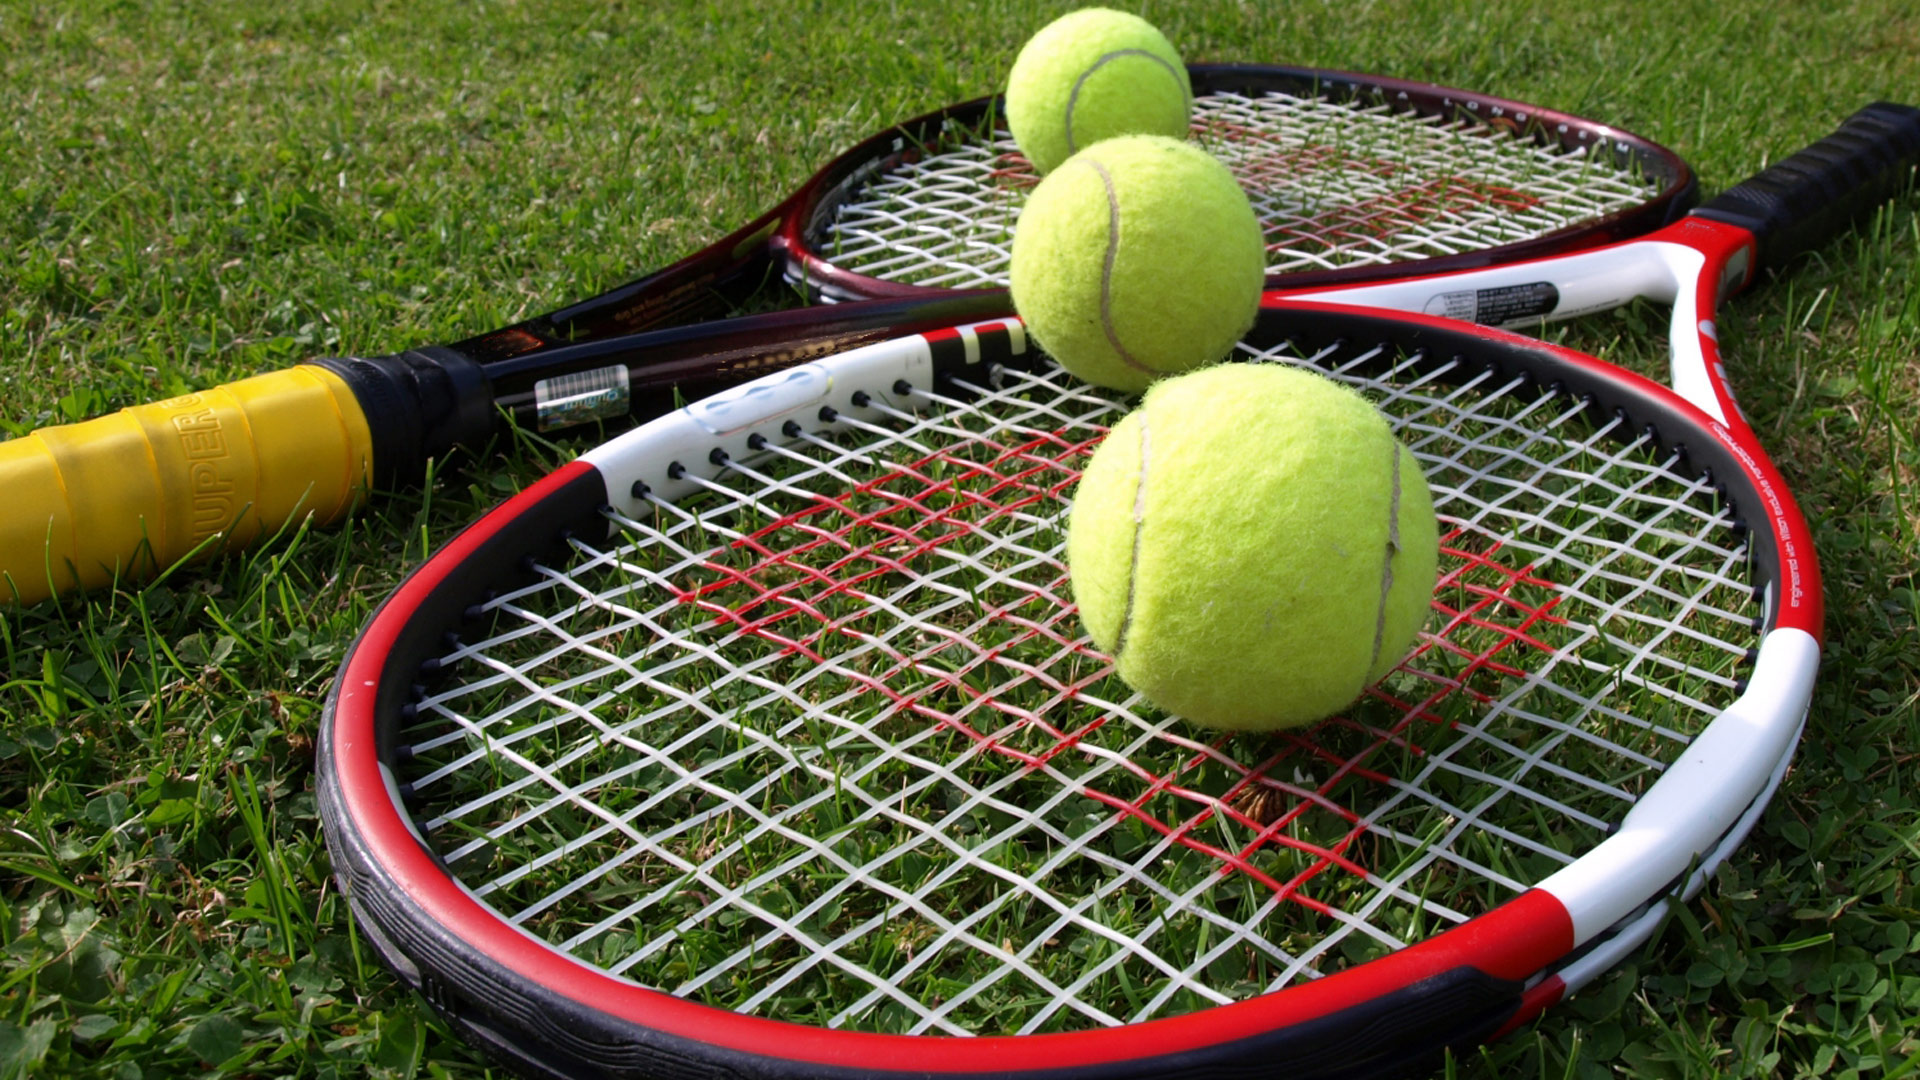 tennis-balls-on-the-grass-at_1920x1080_610-hd